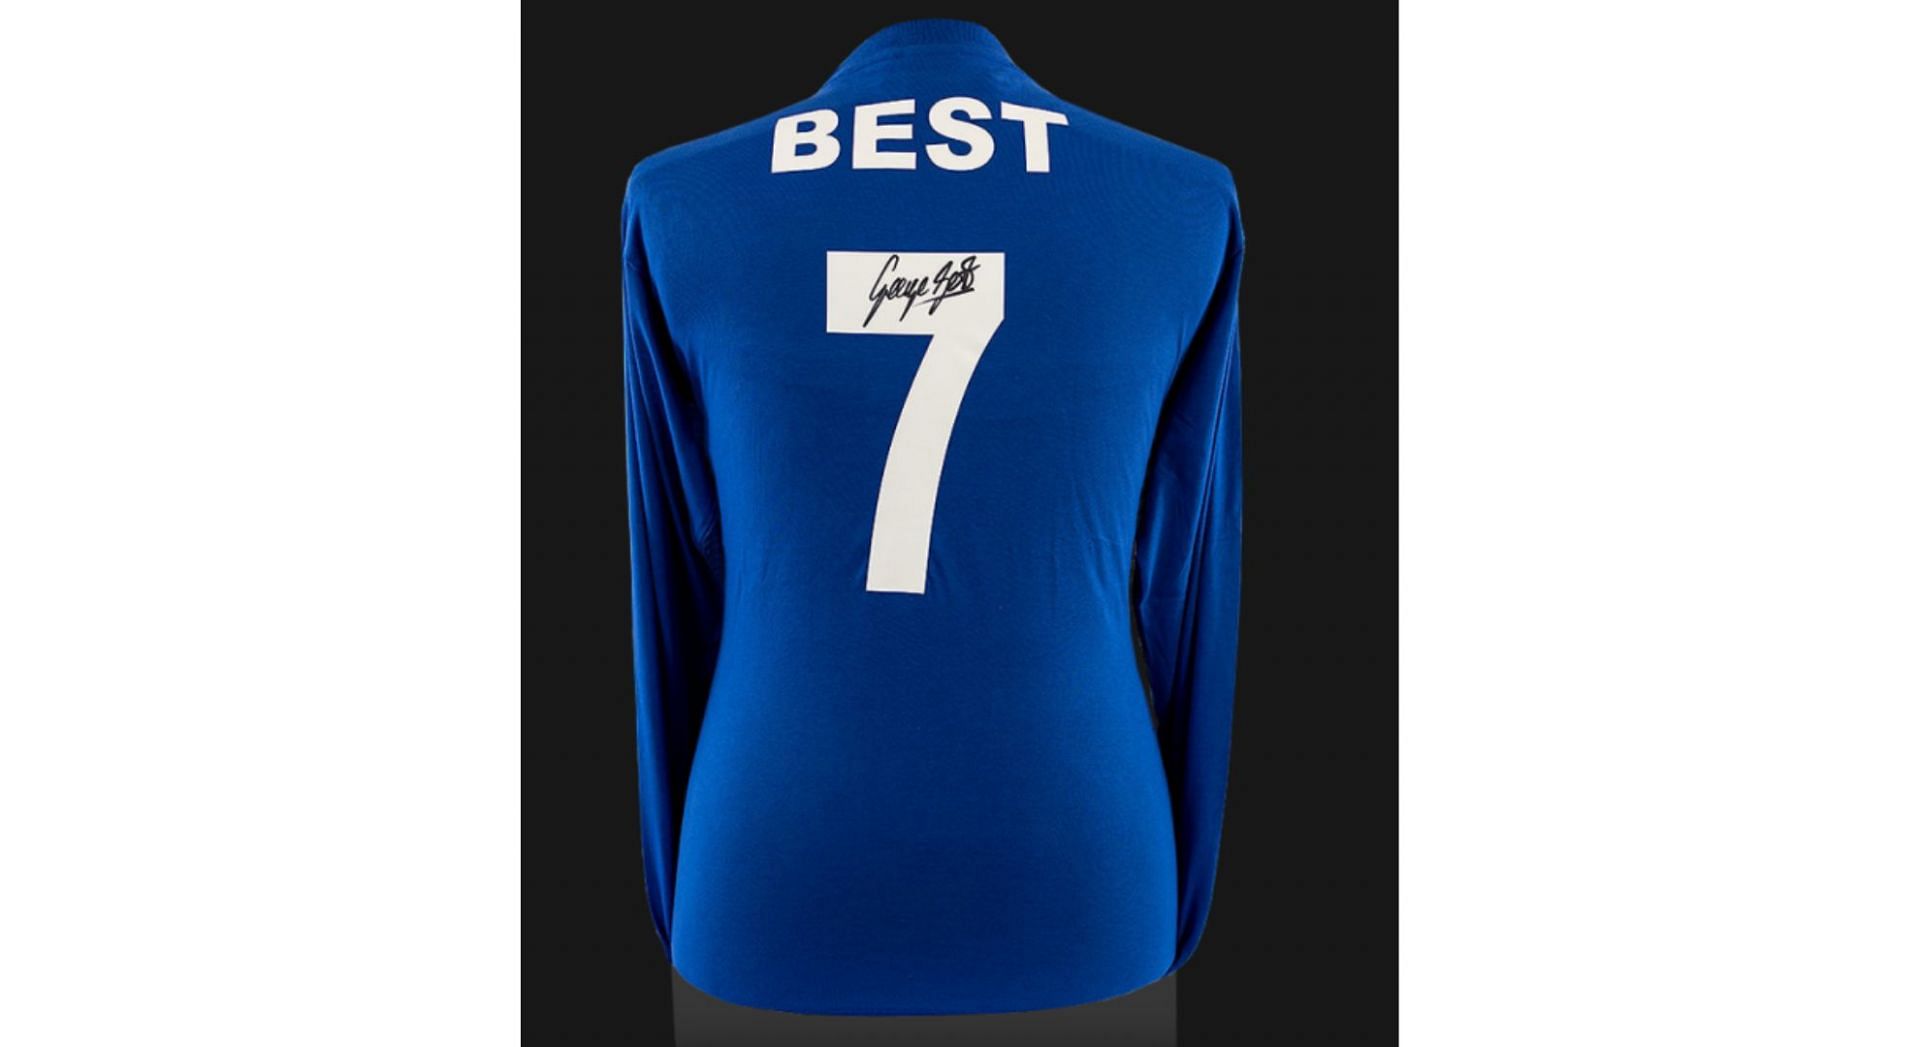 George Best Back Signed Retro Manchester United Away Shirt (Image via Icons)